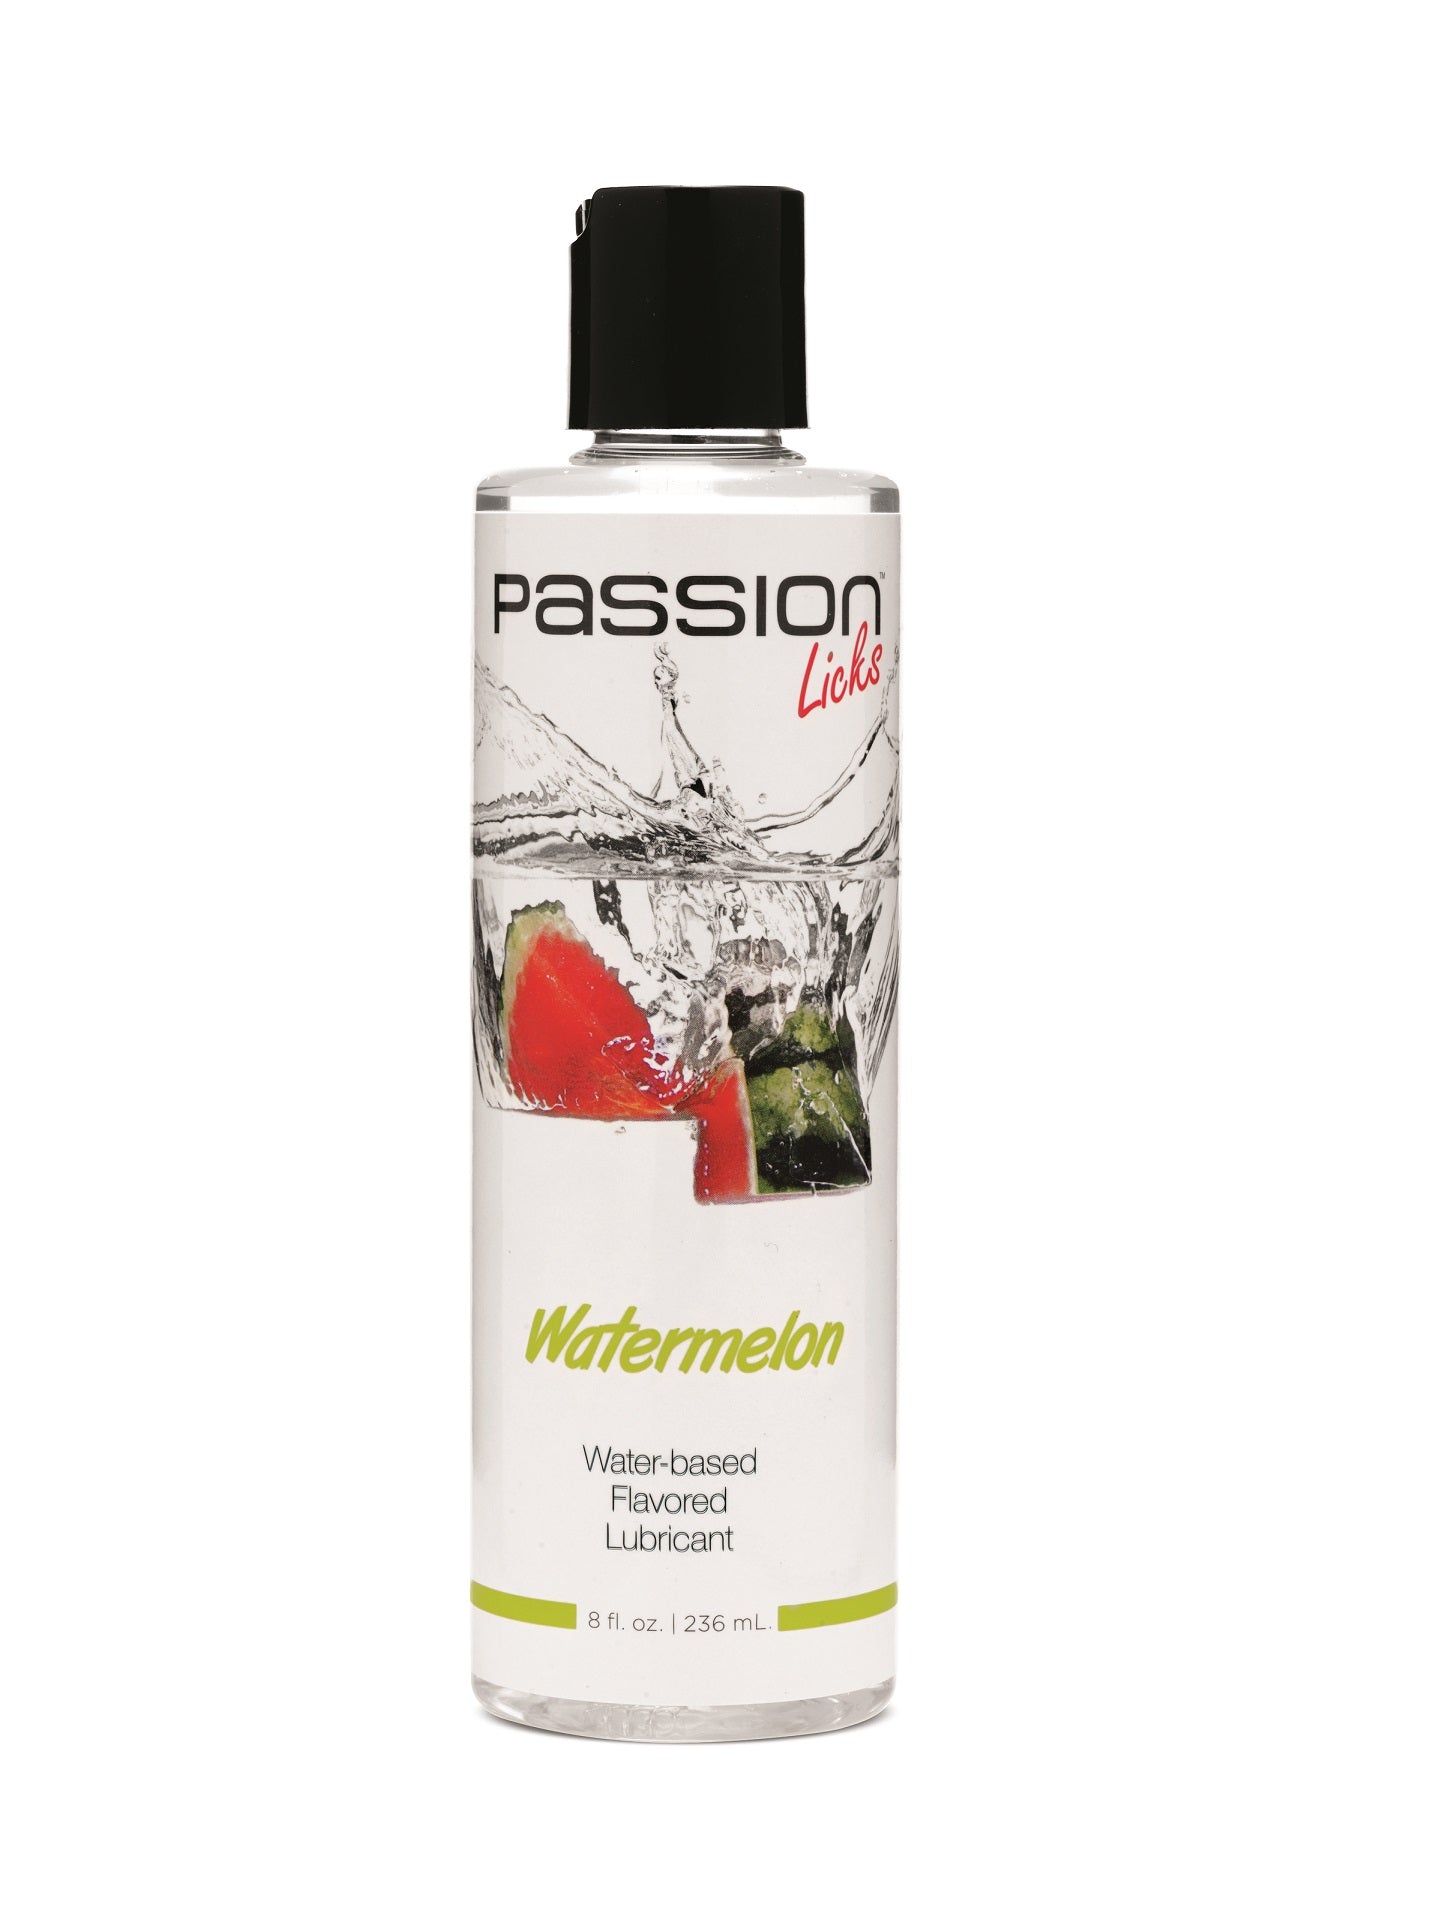 Passsion Licks Watermelon Water Based Flavored Lubricant 8 Fl Oz / 236 ml PL-AE805-WATERMELON